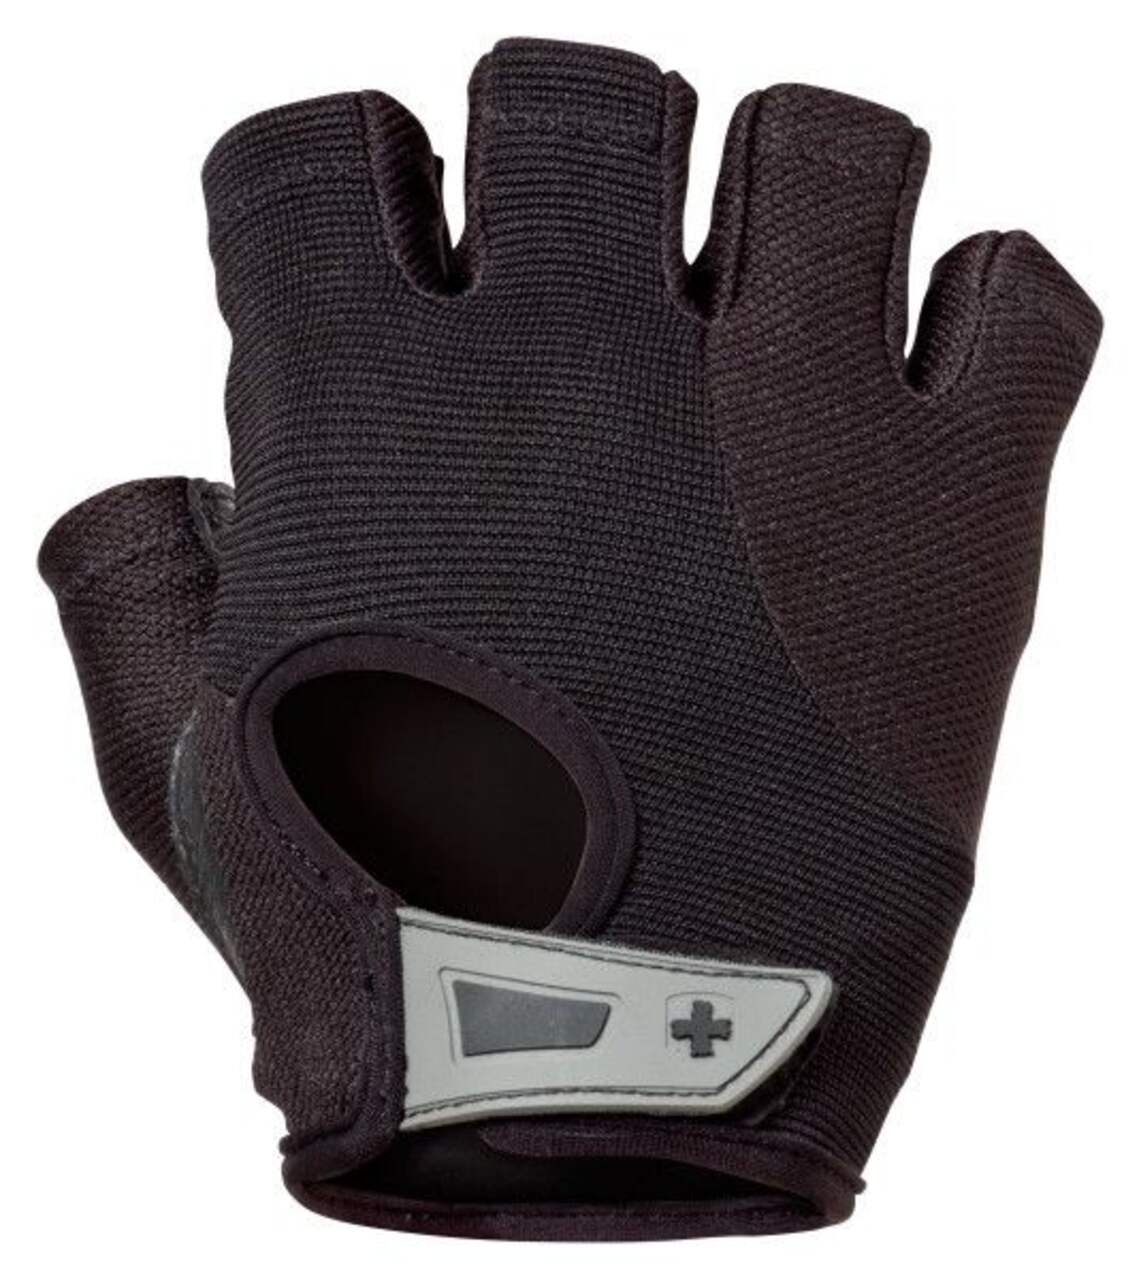  Harbinger Pro Weight Lifting Gloves, Medium, Black : Sports &  Outdoors